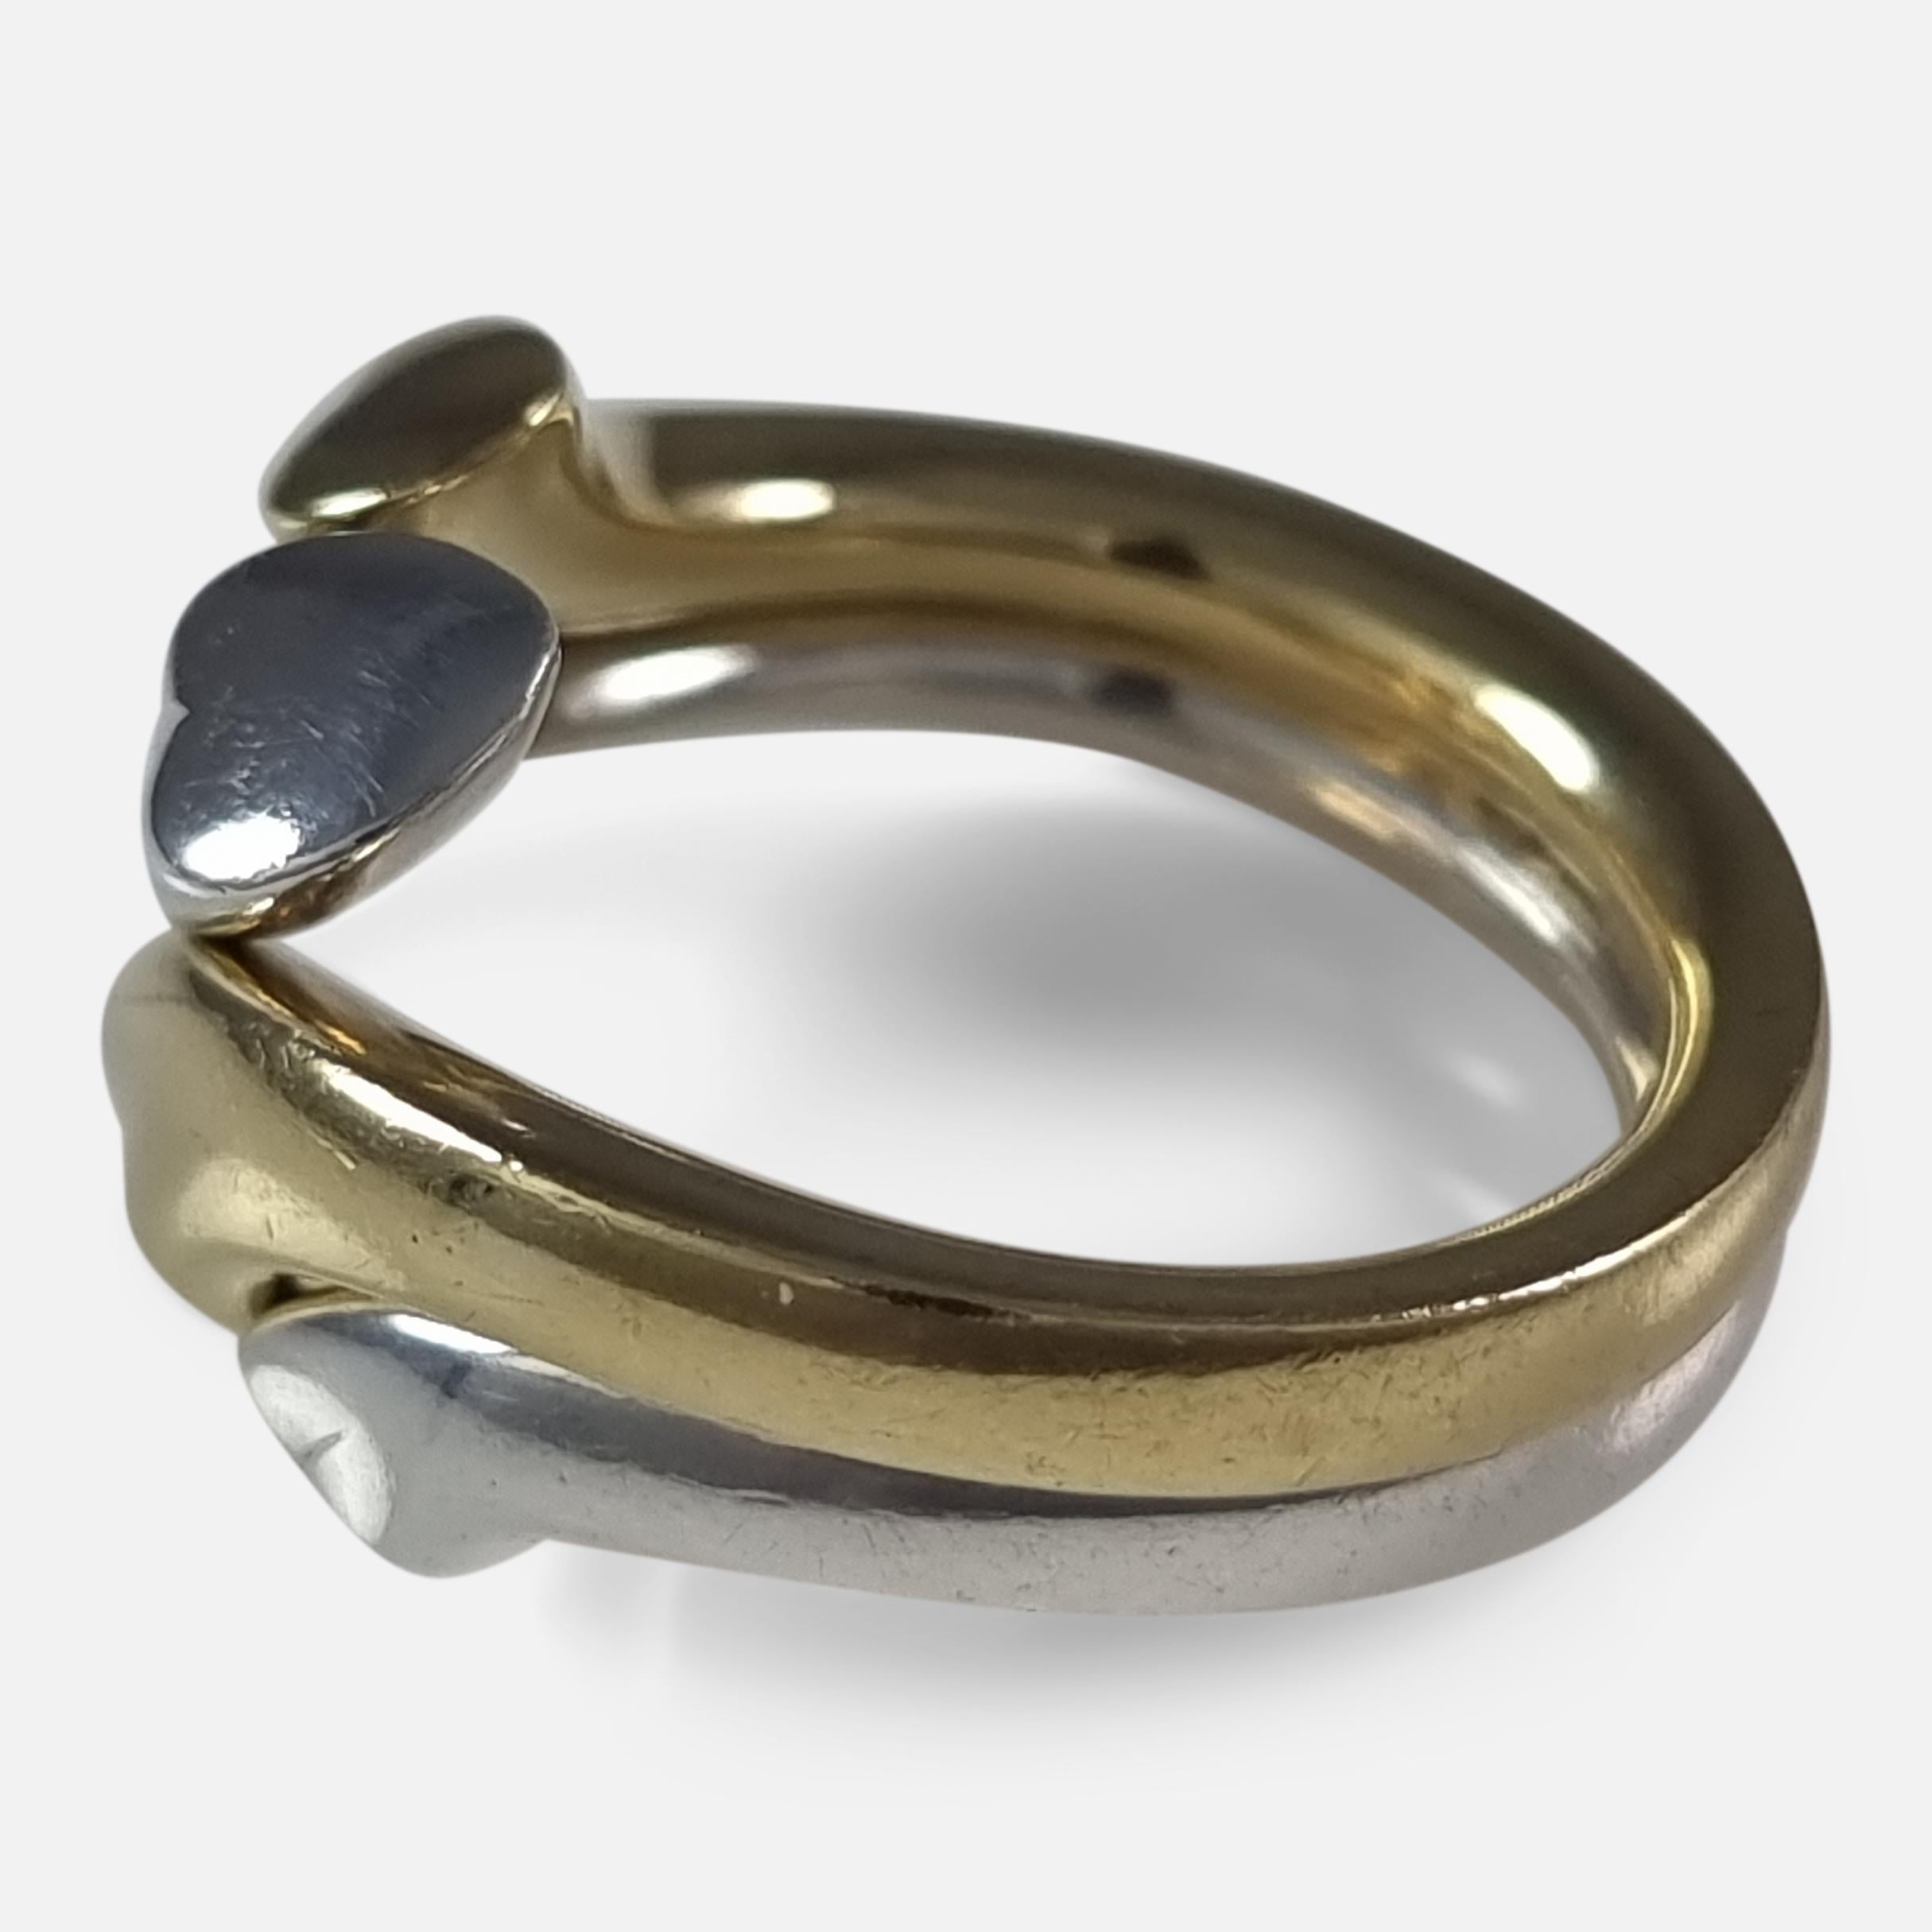 Georg Jensen 18ct Gold and Silver 'Devoted Heart' Ring, Regitze Overgaard 10